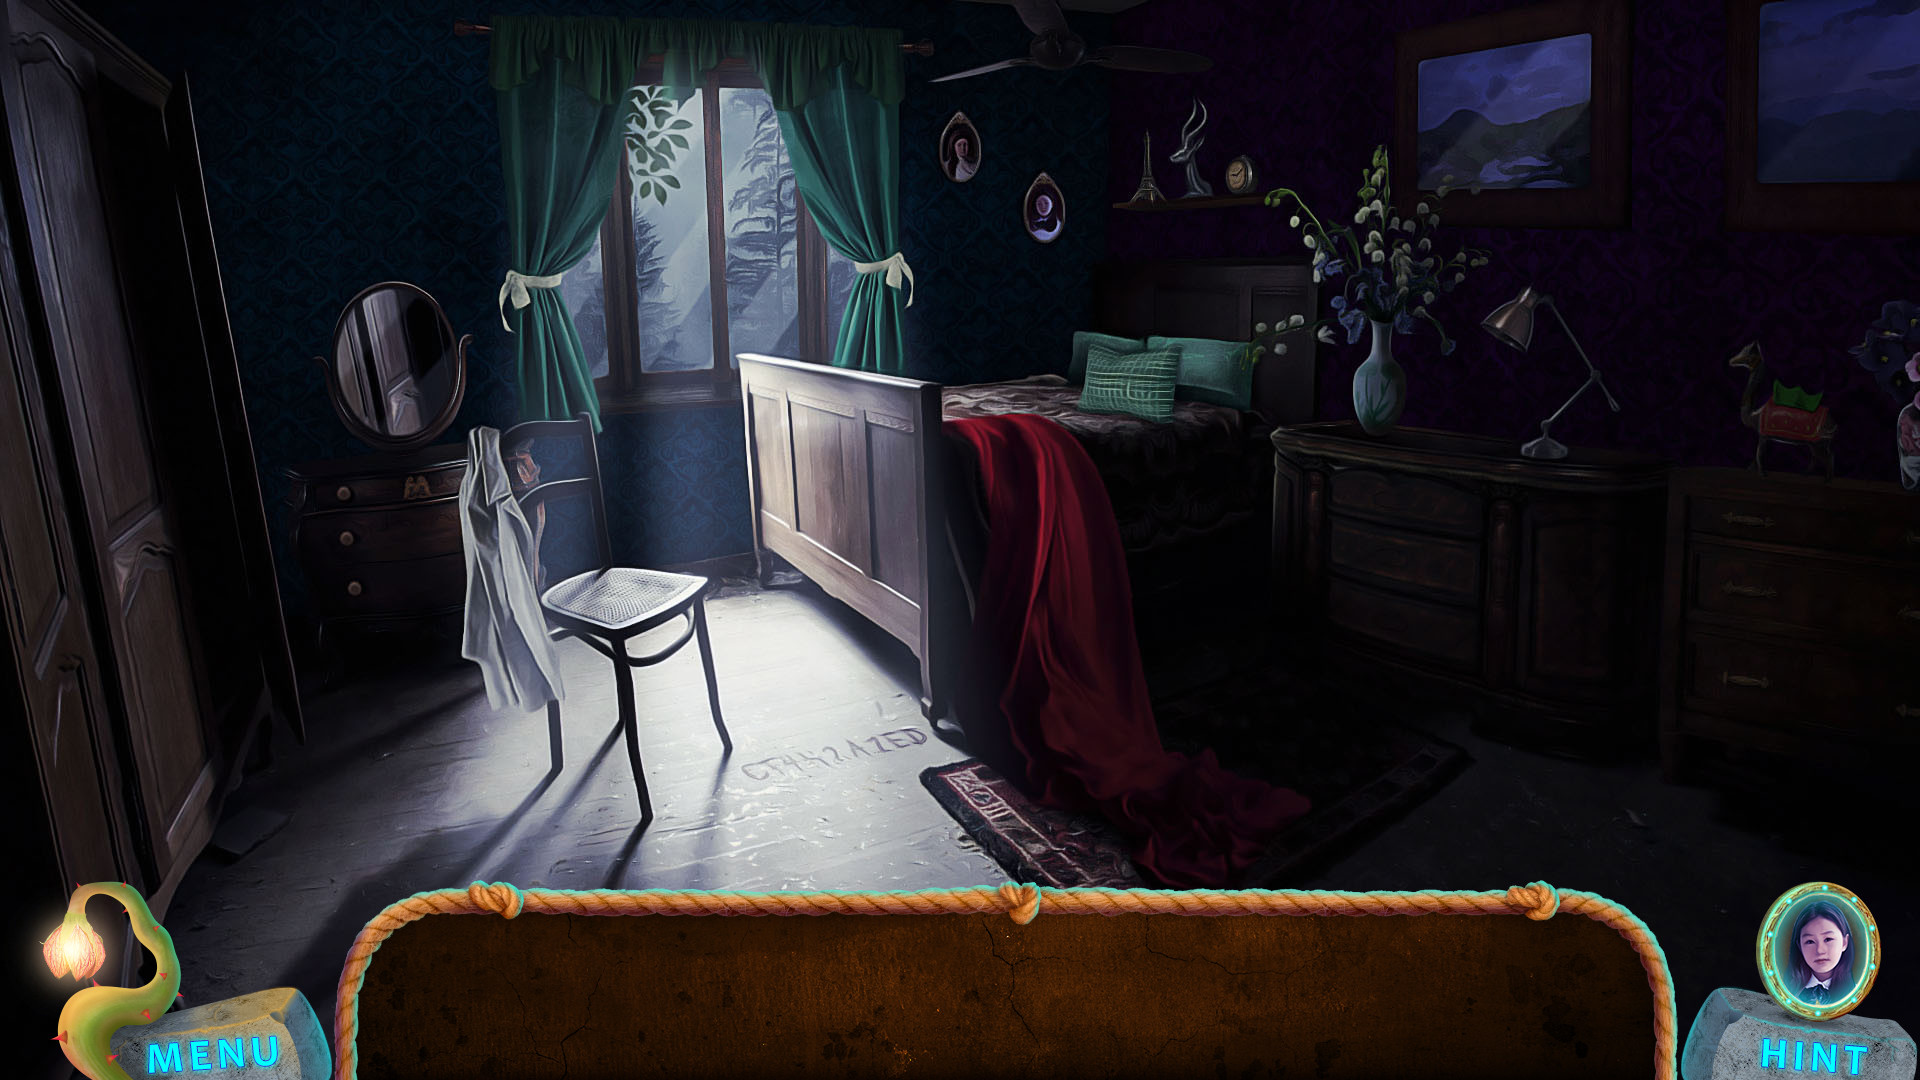 The Orphan A Tale Of An Errant Ghost - Hidden Object Game Steam CD Key